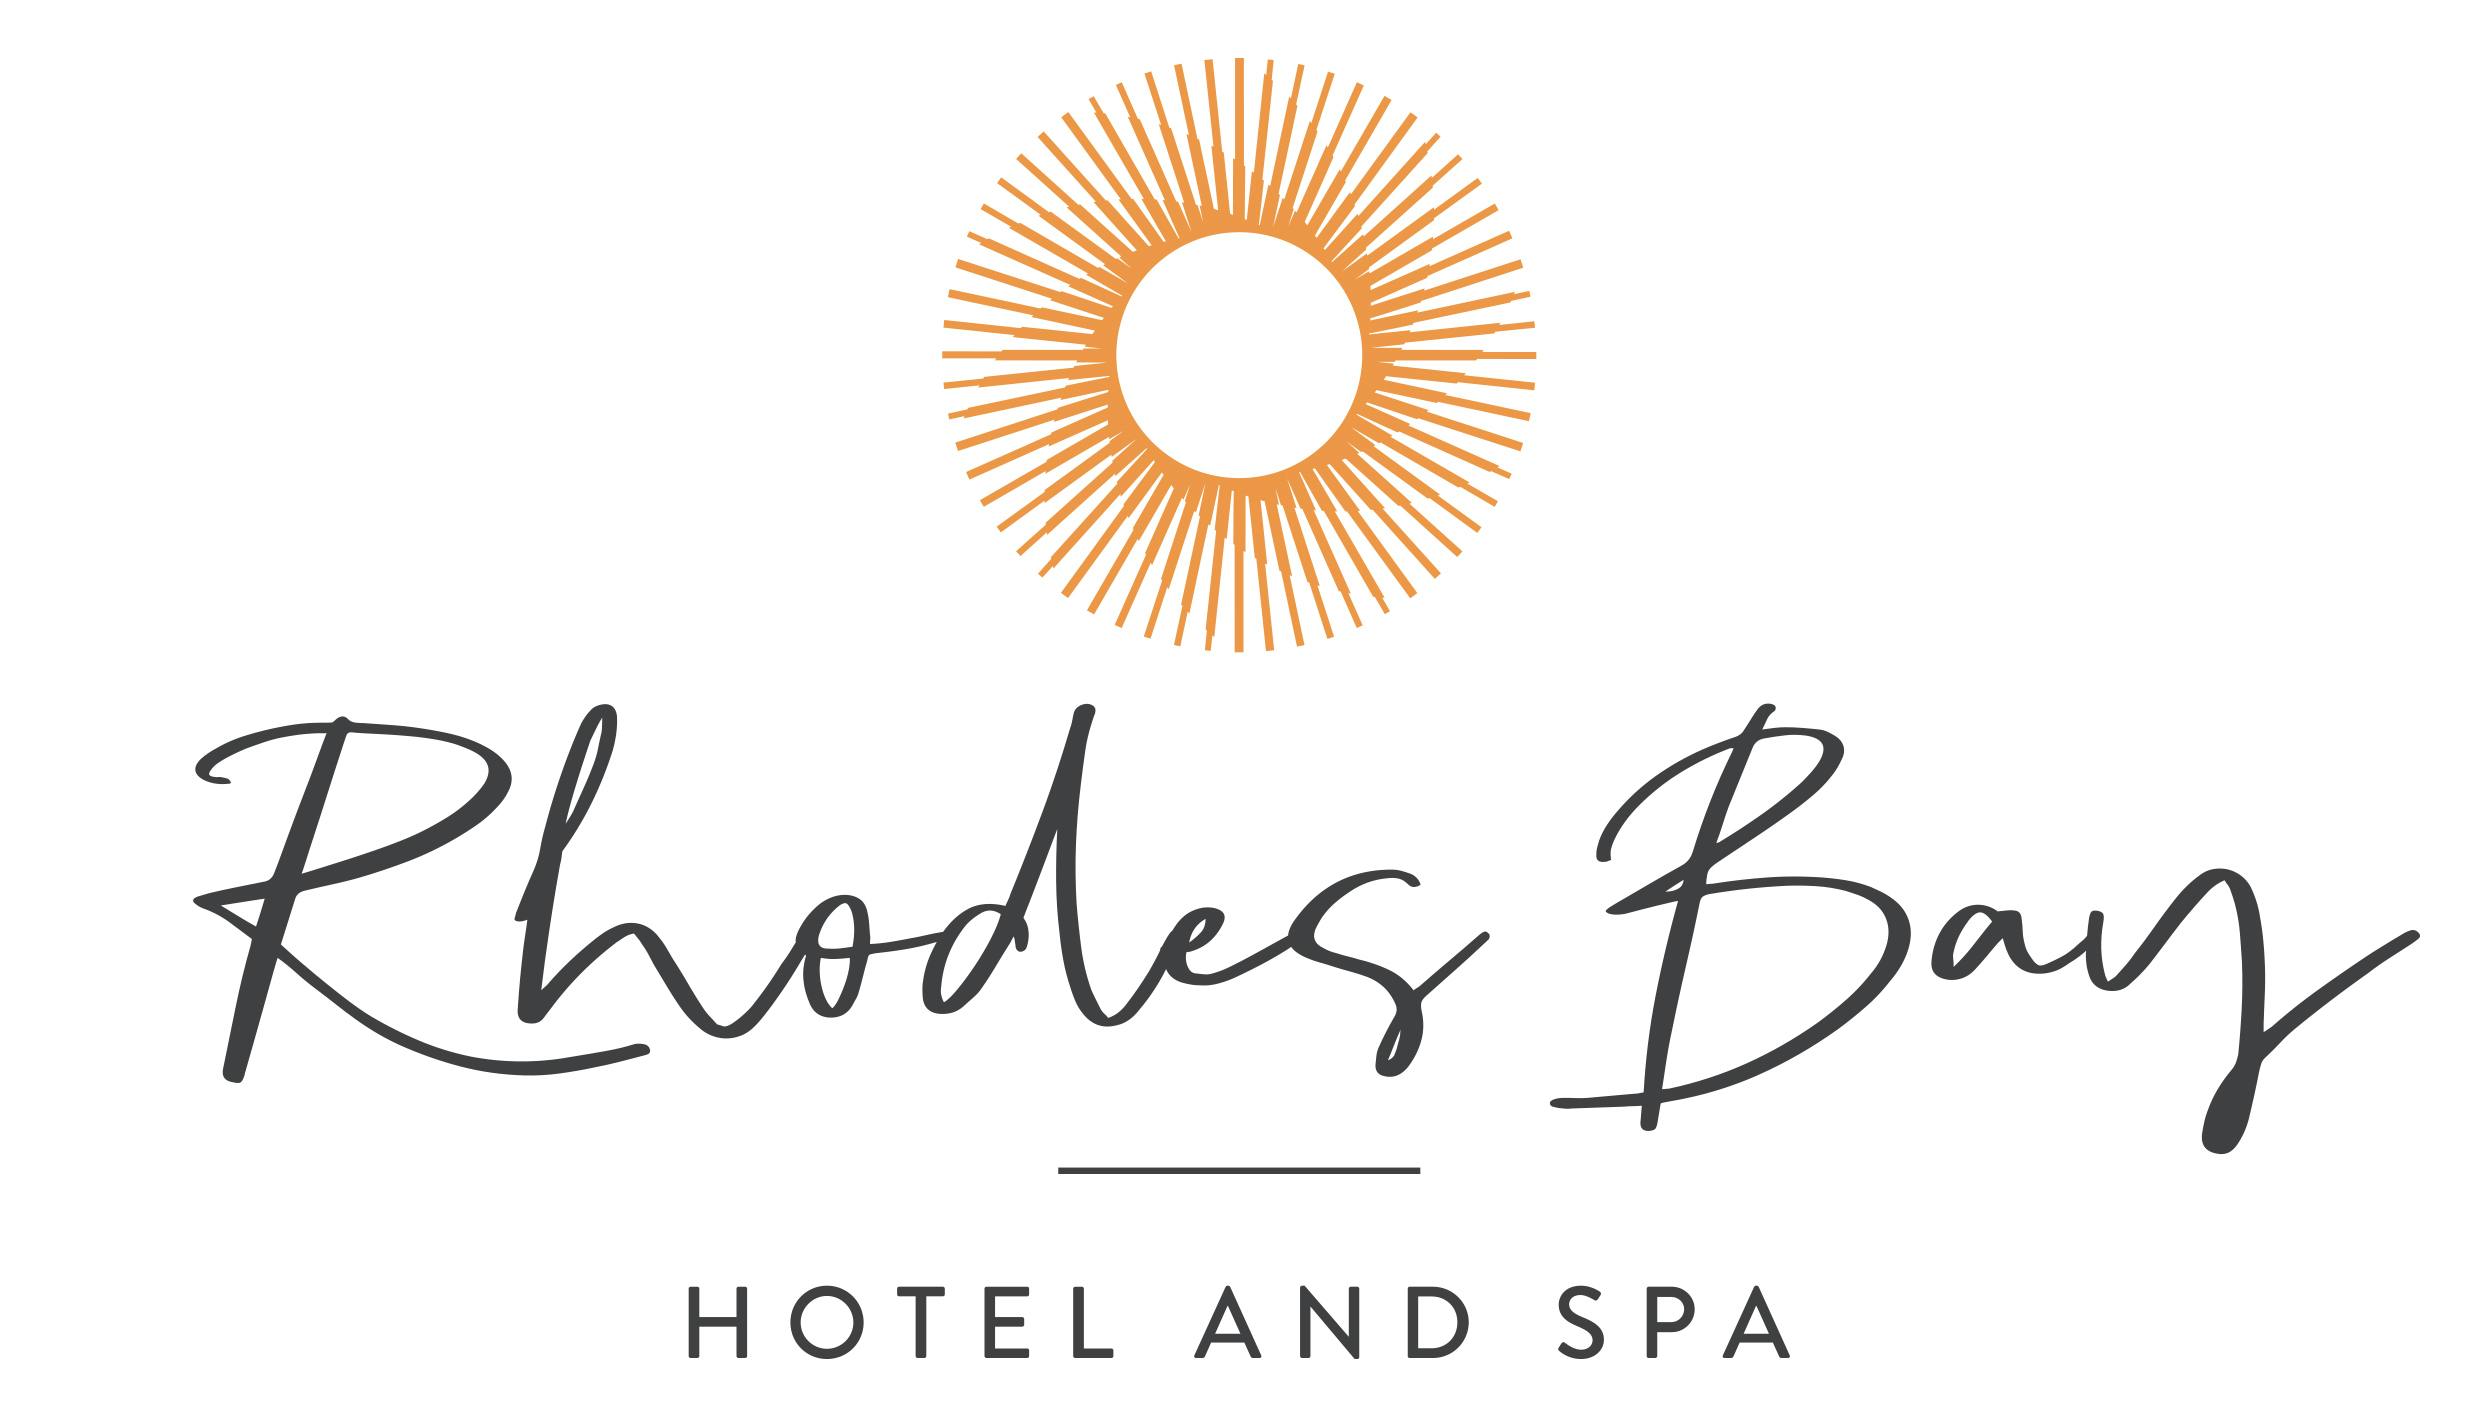 Rhodes Bay Hotel and SPA logo